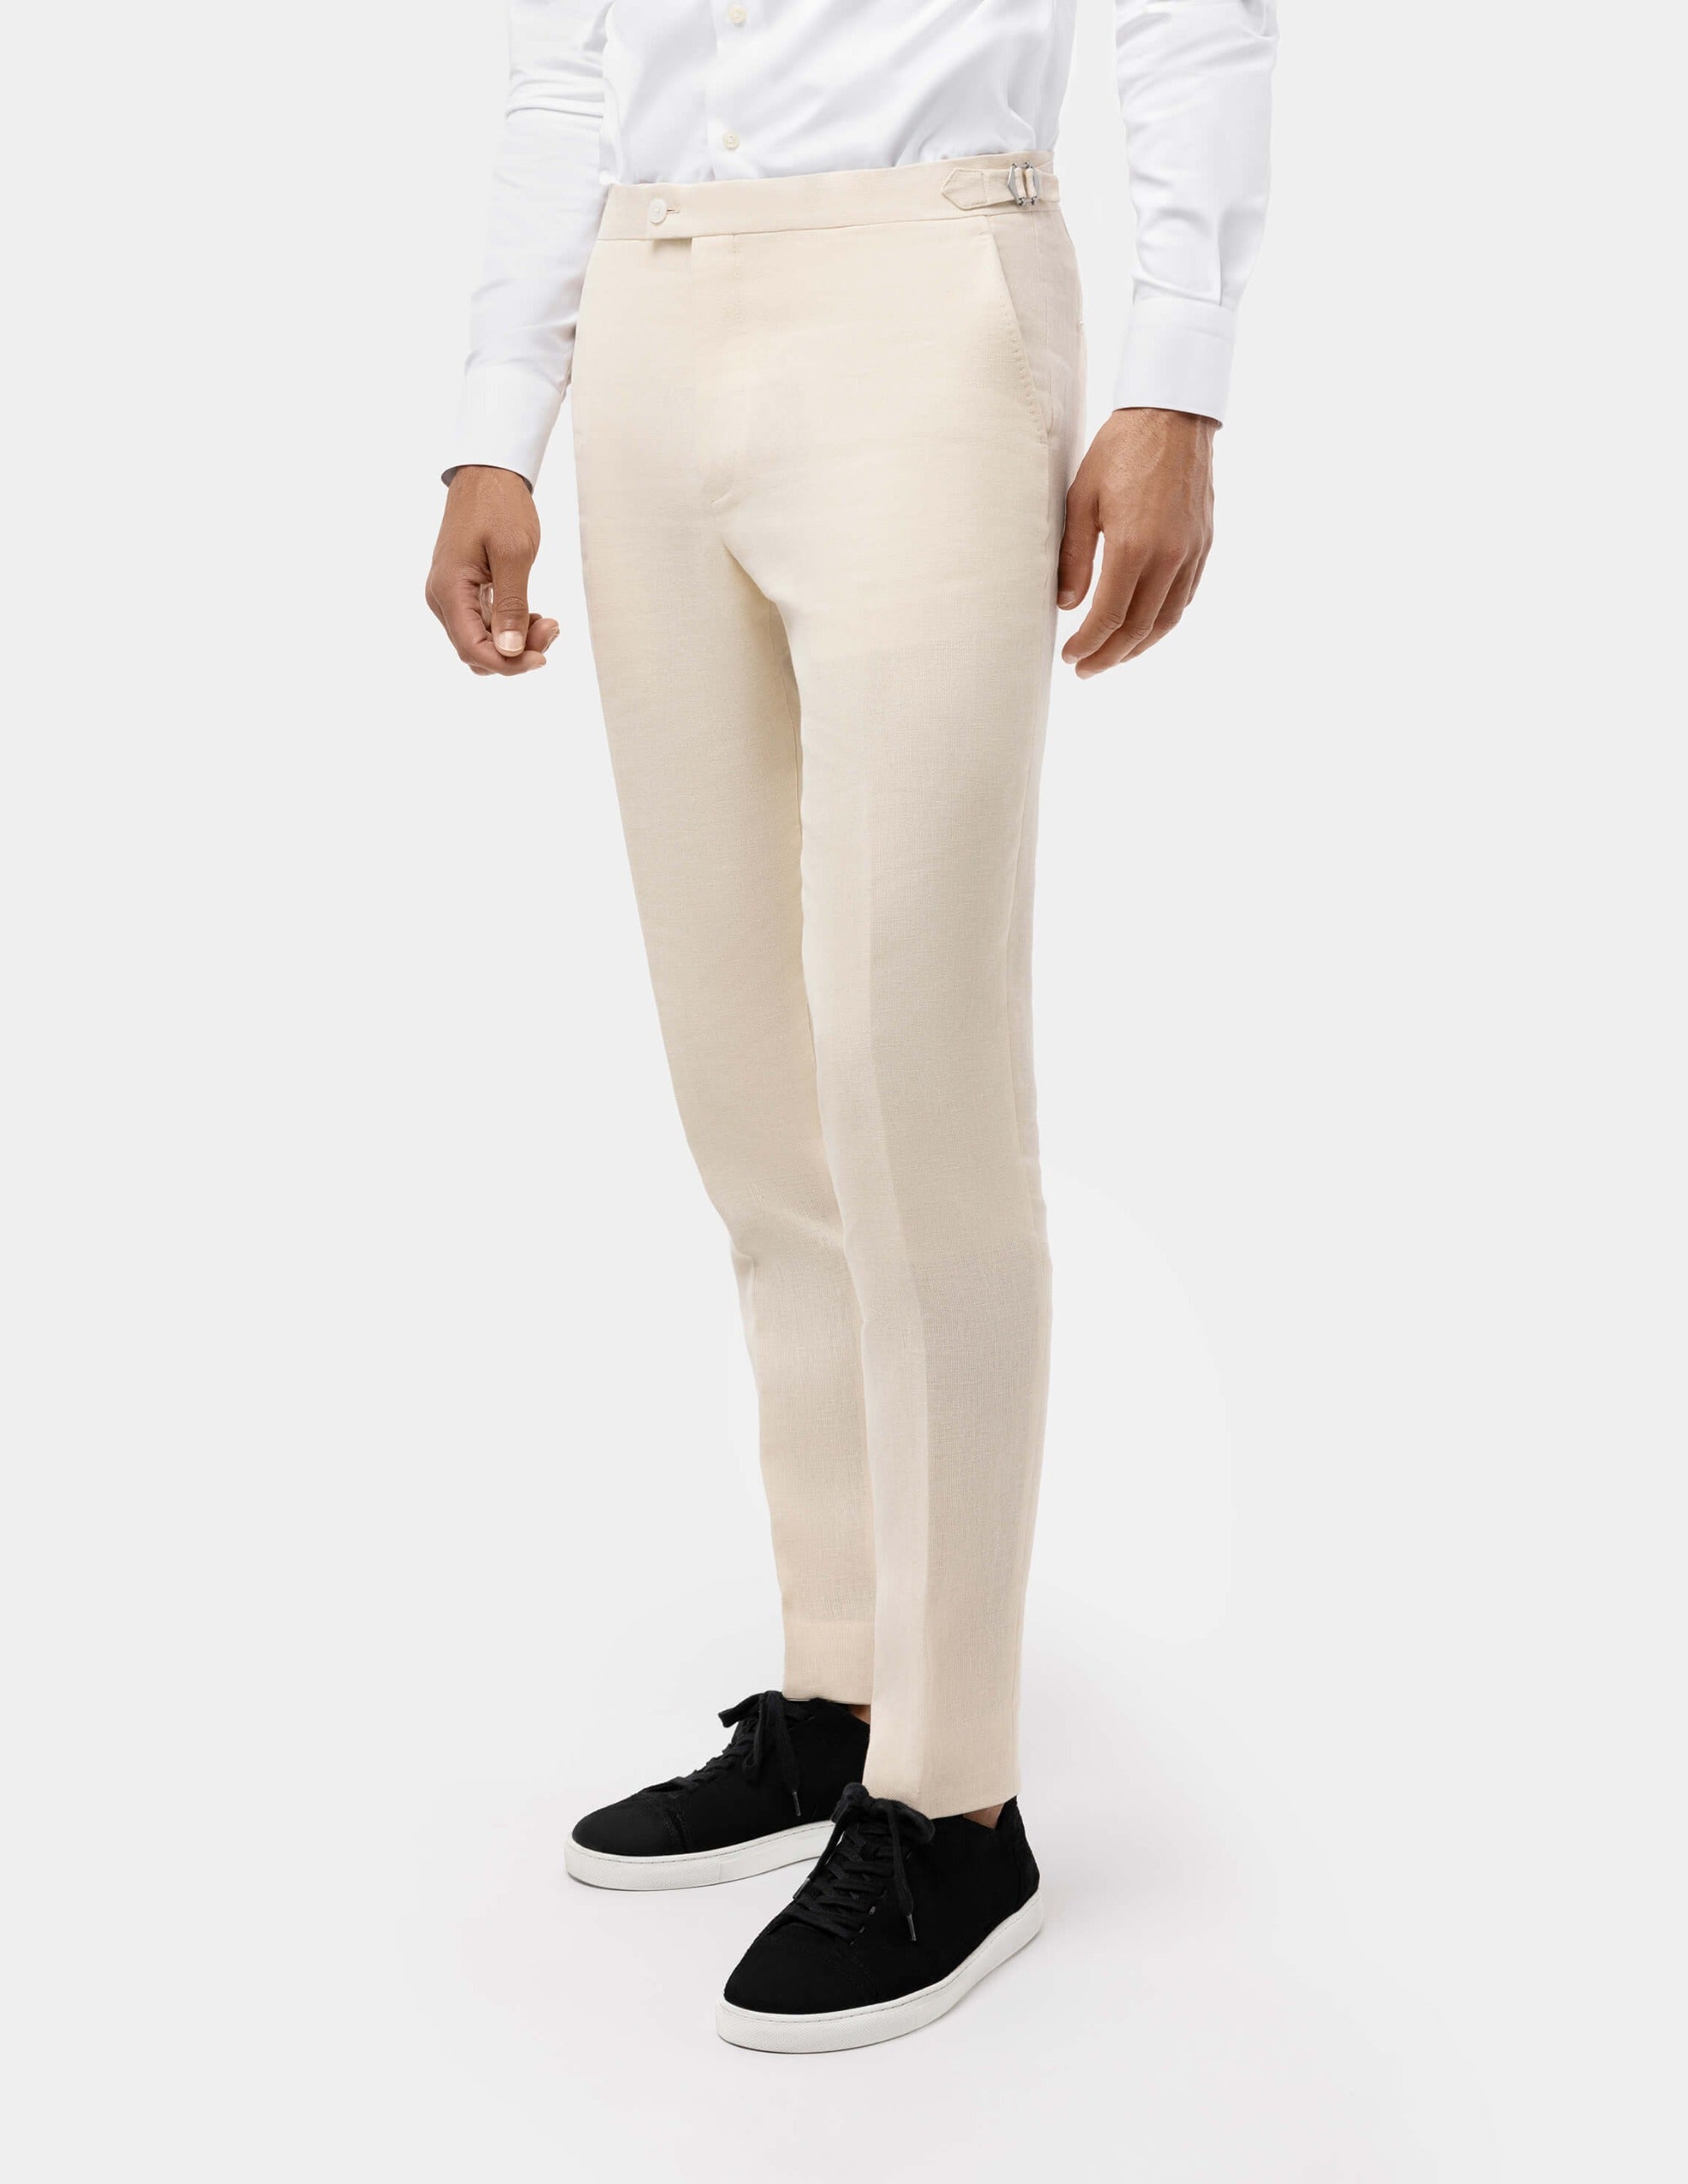 Linen Pants for Men, Beige Lounge Pants, Linen Trousers, Mans Organic  Pants, Natural Flax Trousers, Pajama Pants, Spring Summer Trousers - Etsy  Sweden